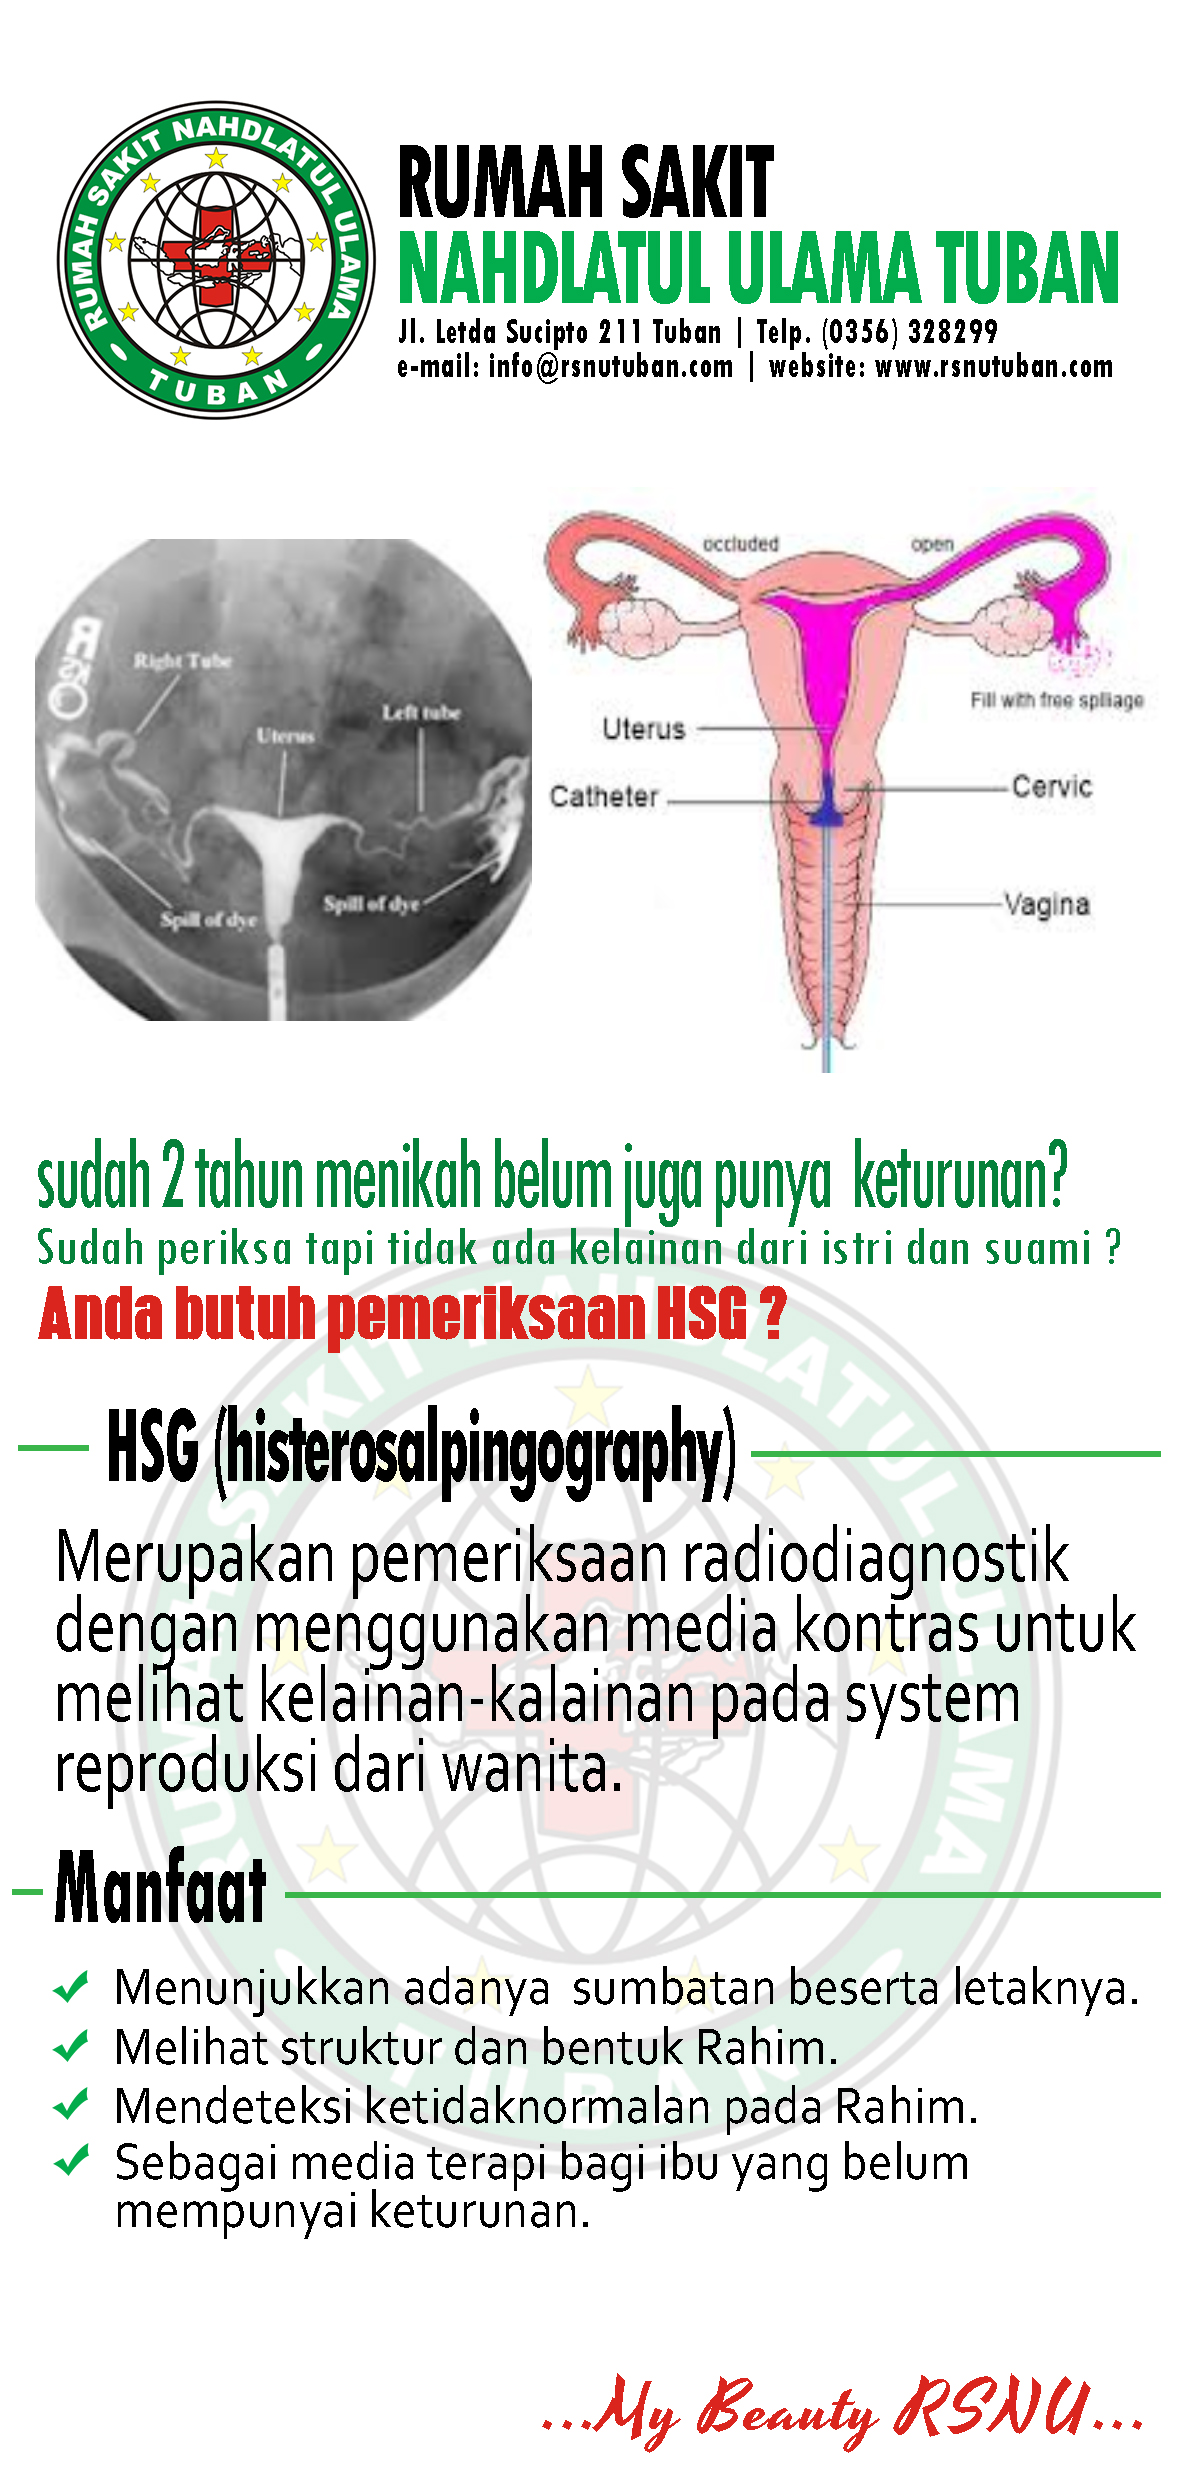 Brosur Histerosalpingography - RSNU Tuban